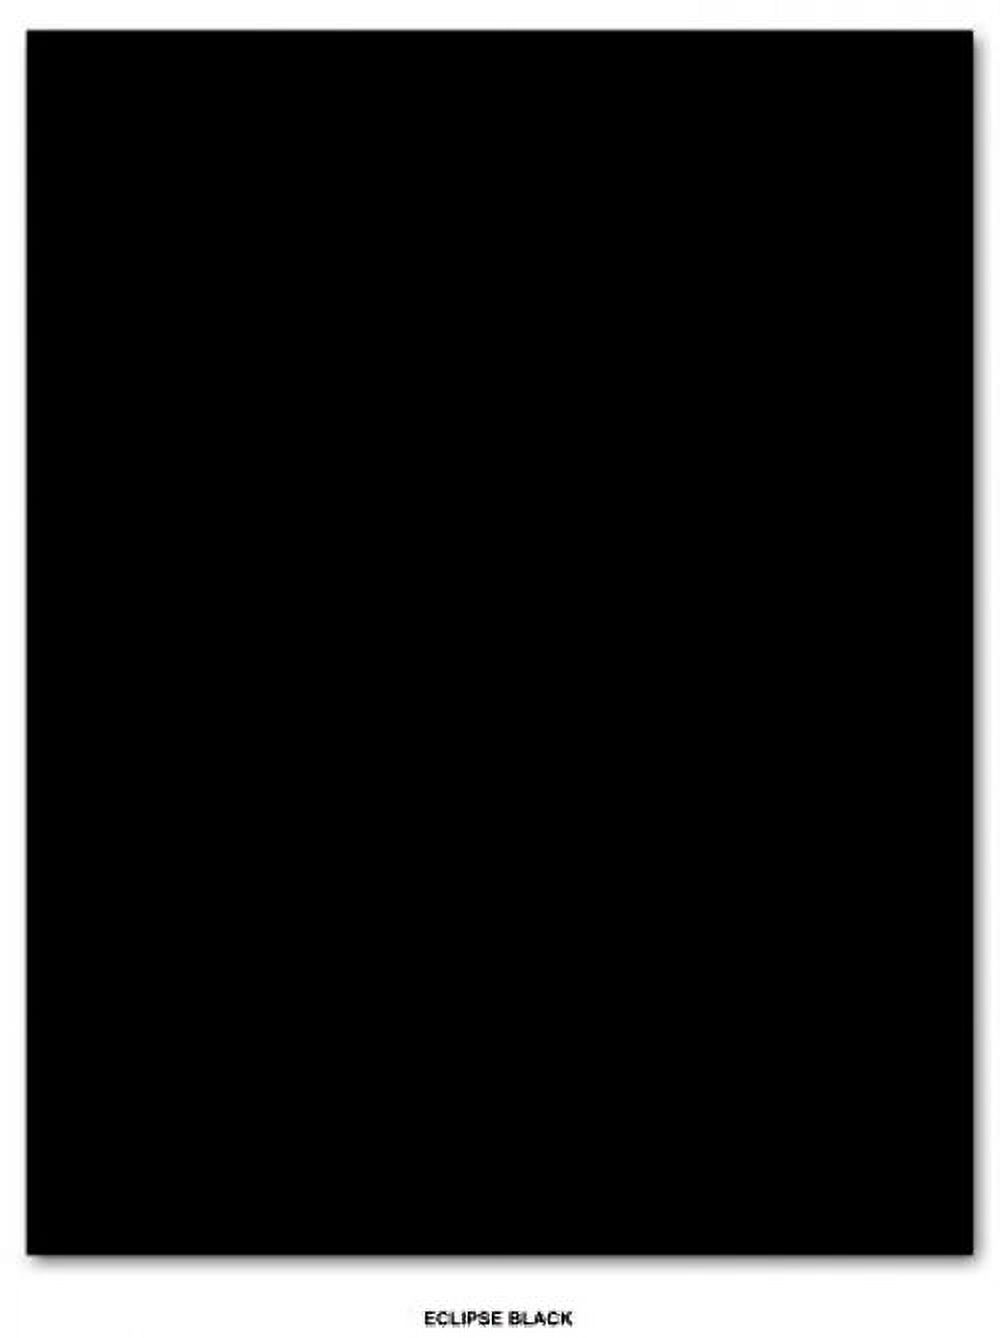 Mohawk BriteHue Bright Color Paper | Black | 24lb Bond / 60lb Text Paper |  8.5" x 11" (Letter Size) | 100 Sheets Per Pack - image 1 of 2